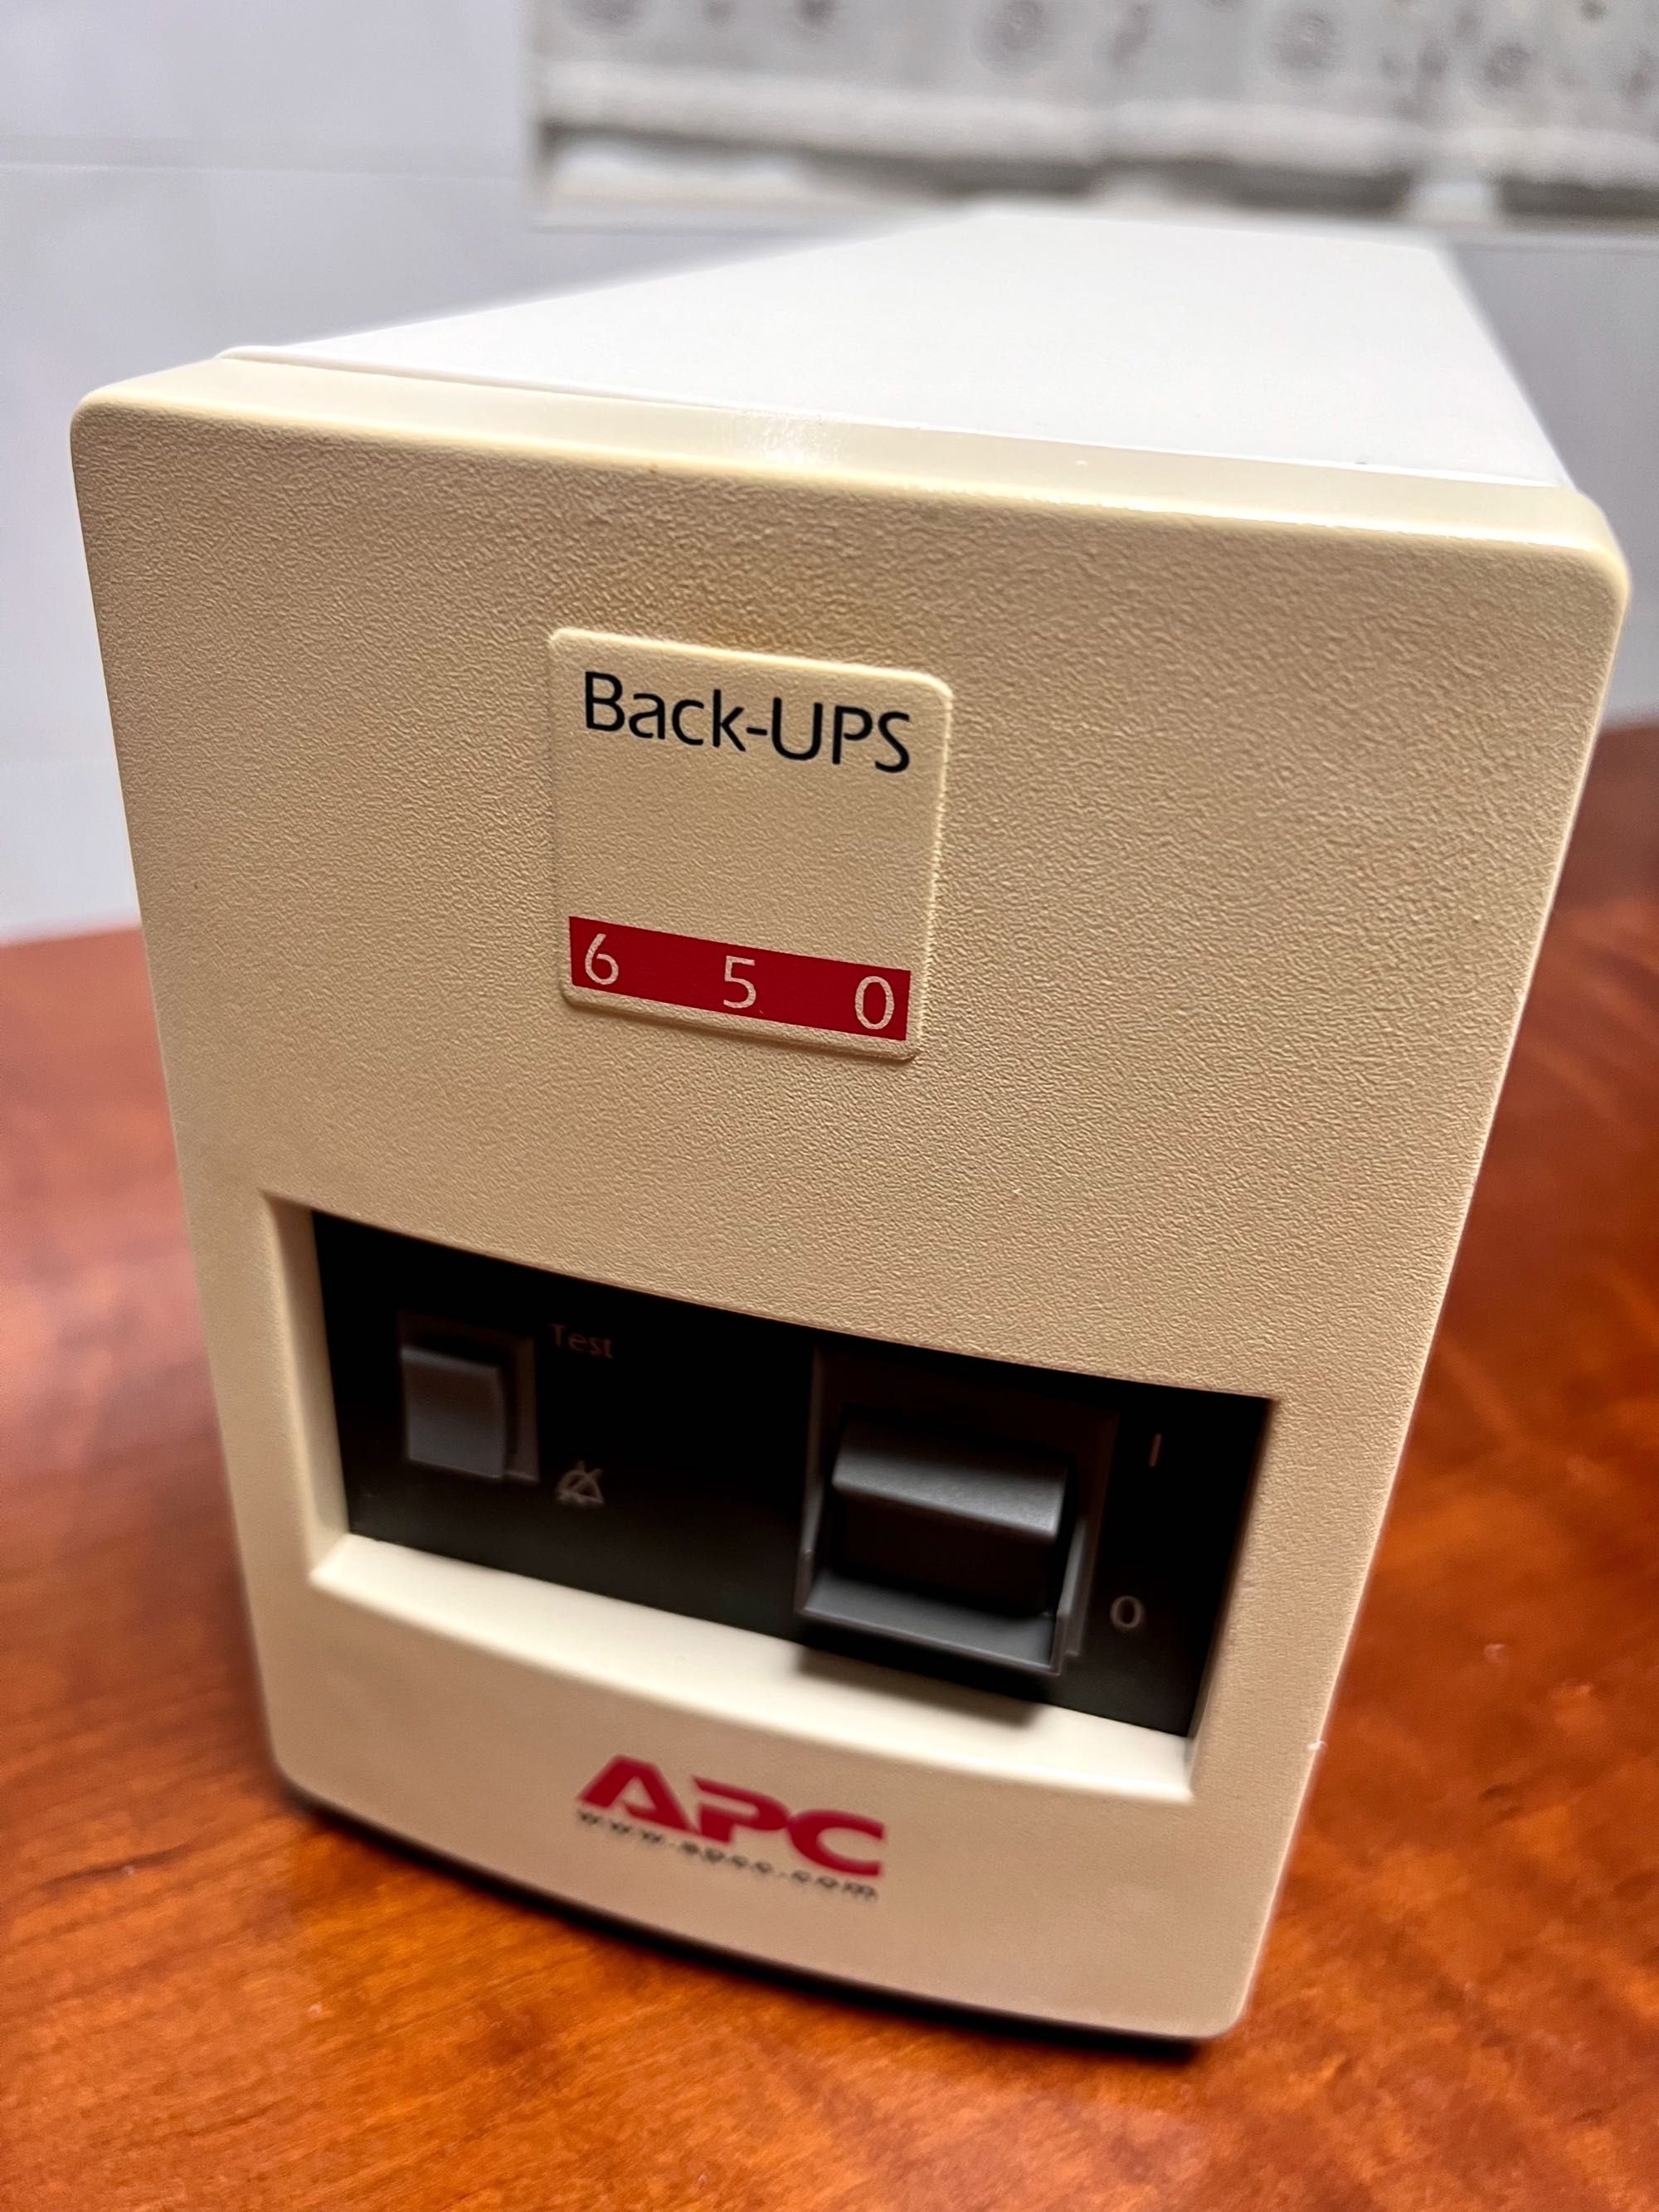 APC Back-UPS bk650mi